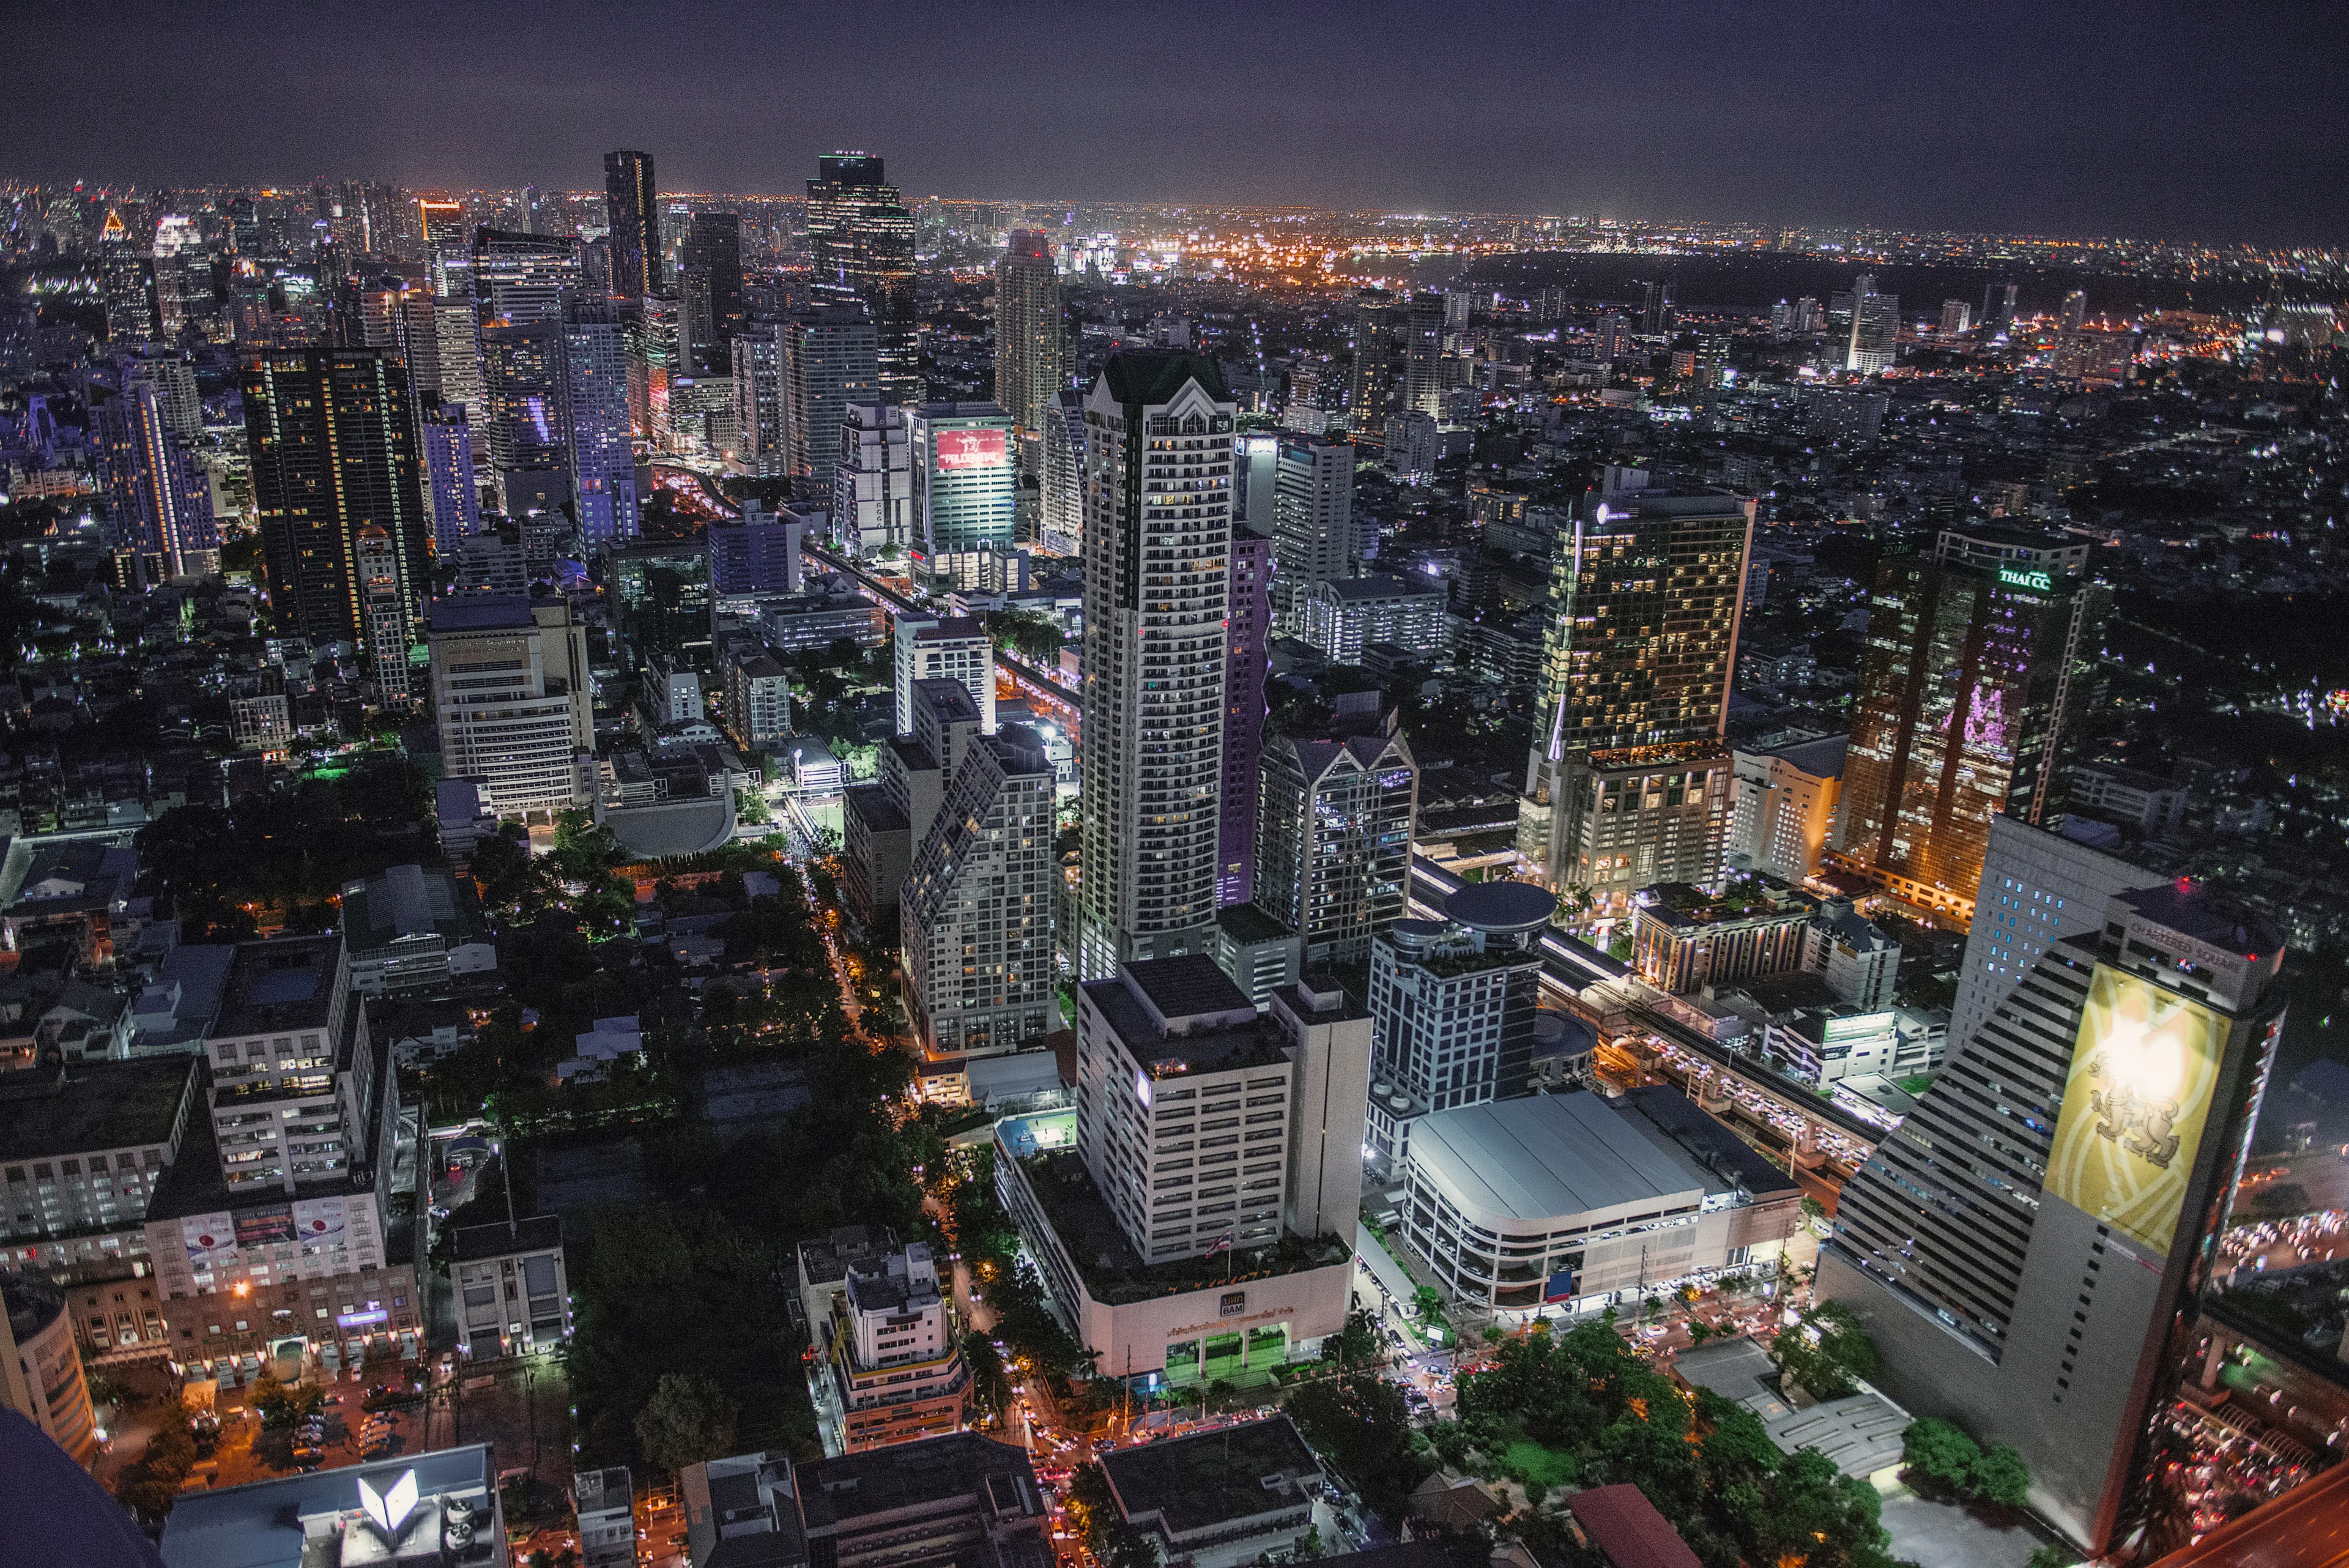 Siam, the Vibrant Bangkok Vibe